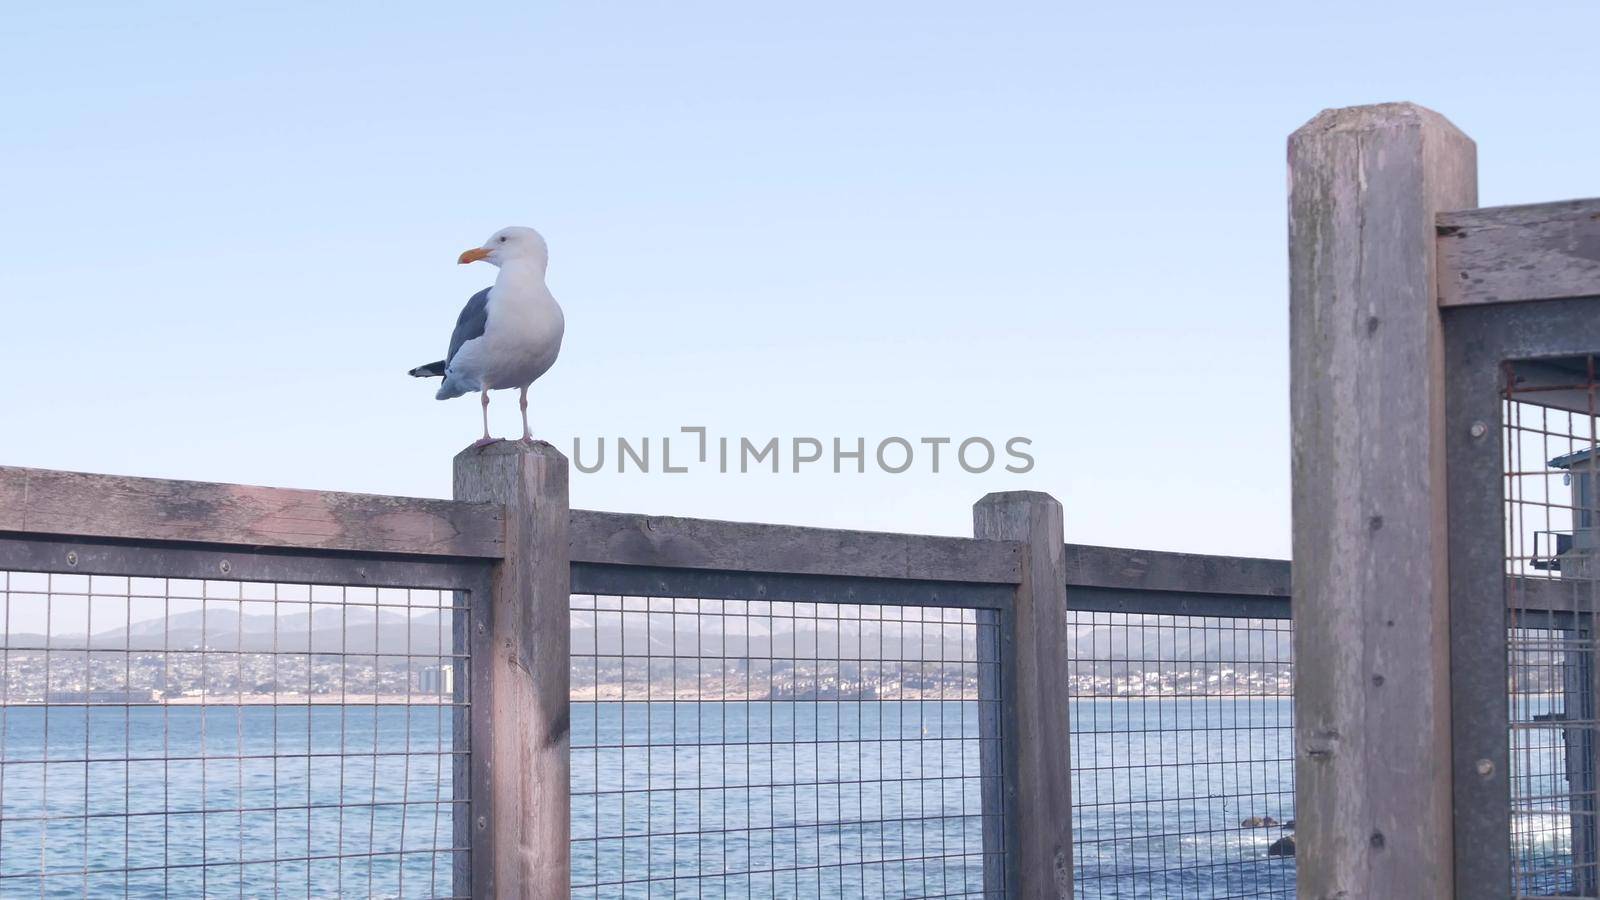 Waterfront wooden boardwalk, Monterey California USA. Beachfront promenade on piles, pillars or pylons, ocean sea water and bay aquarium, Cannery Row street. Waterside resort. Seagull bird on railings